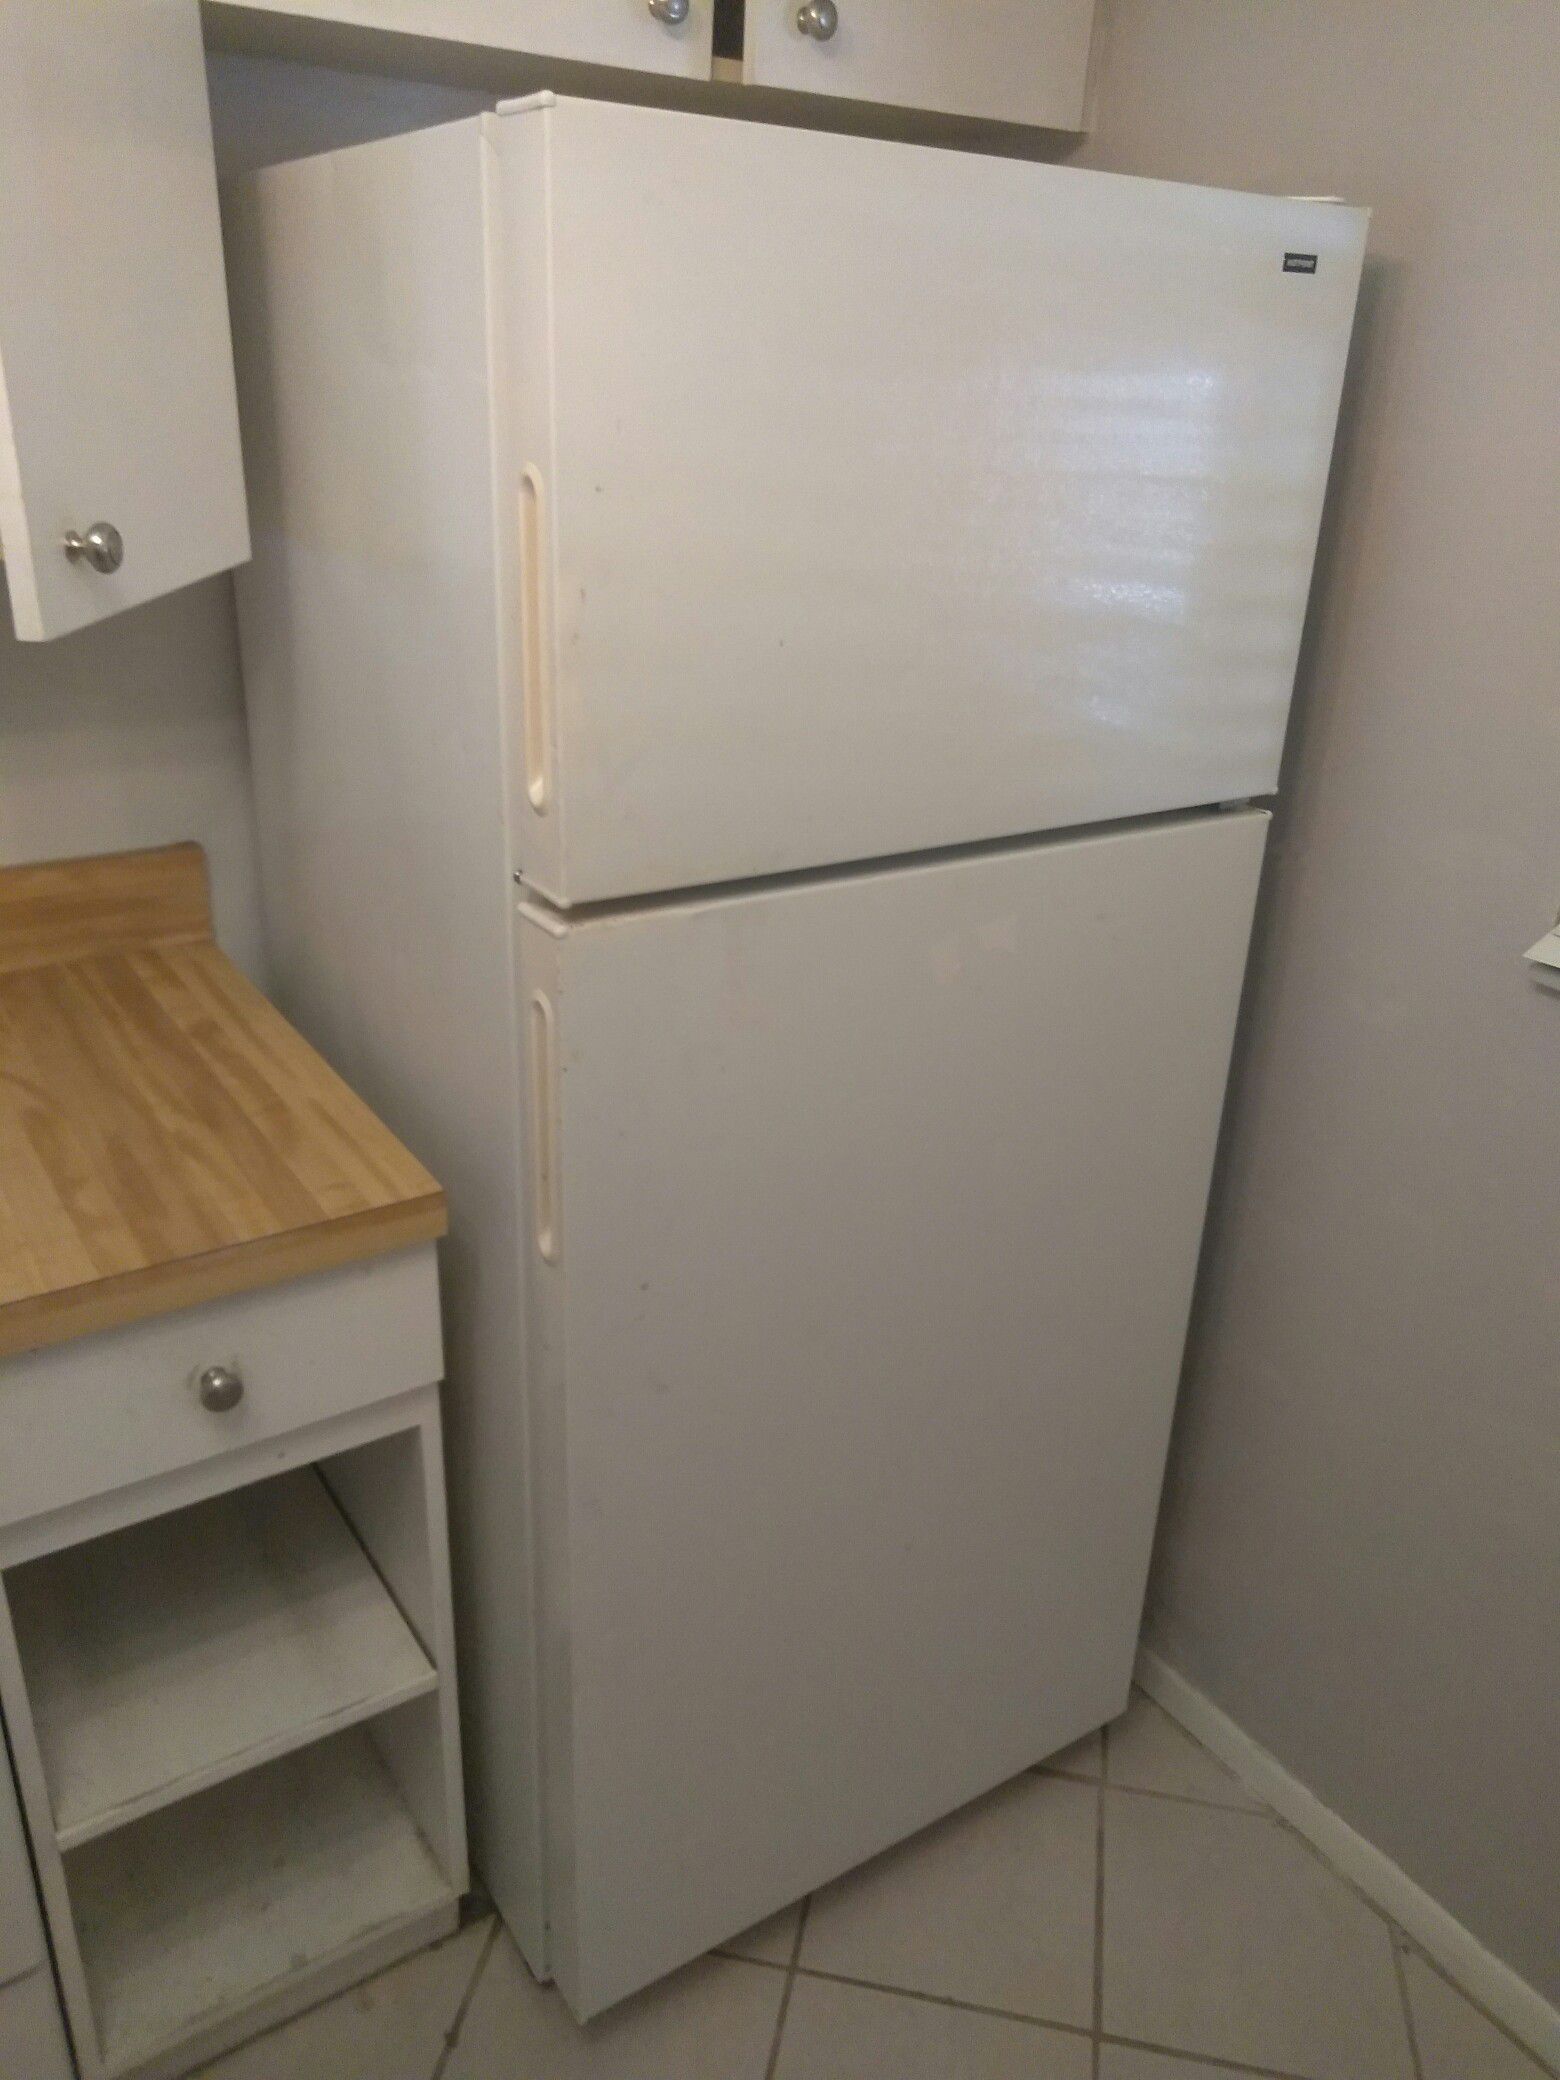 Working refrigerator